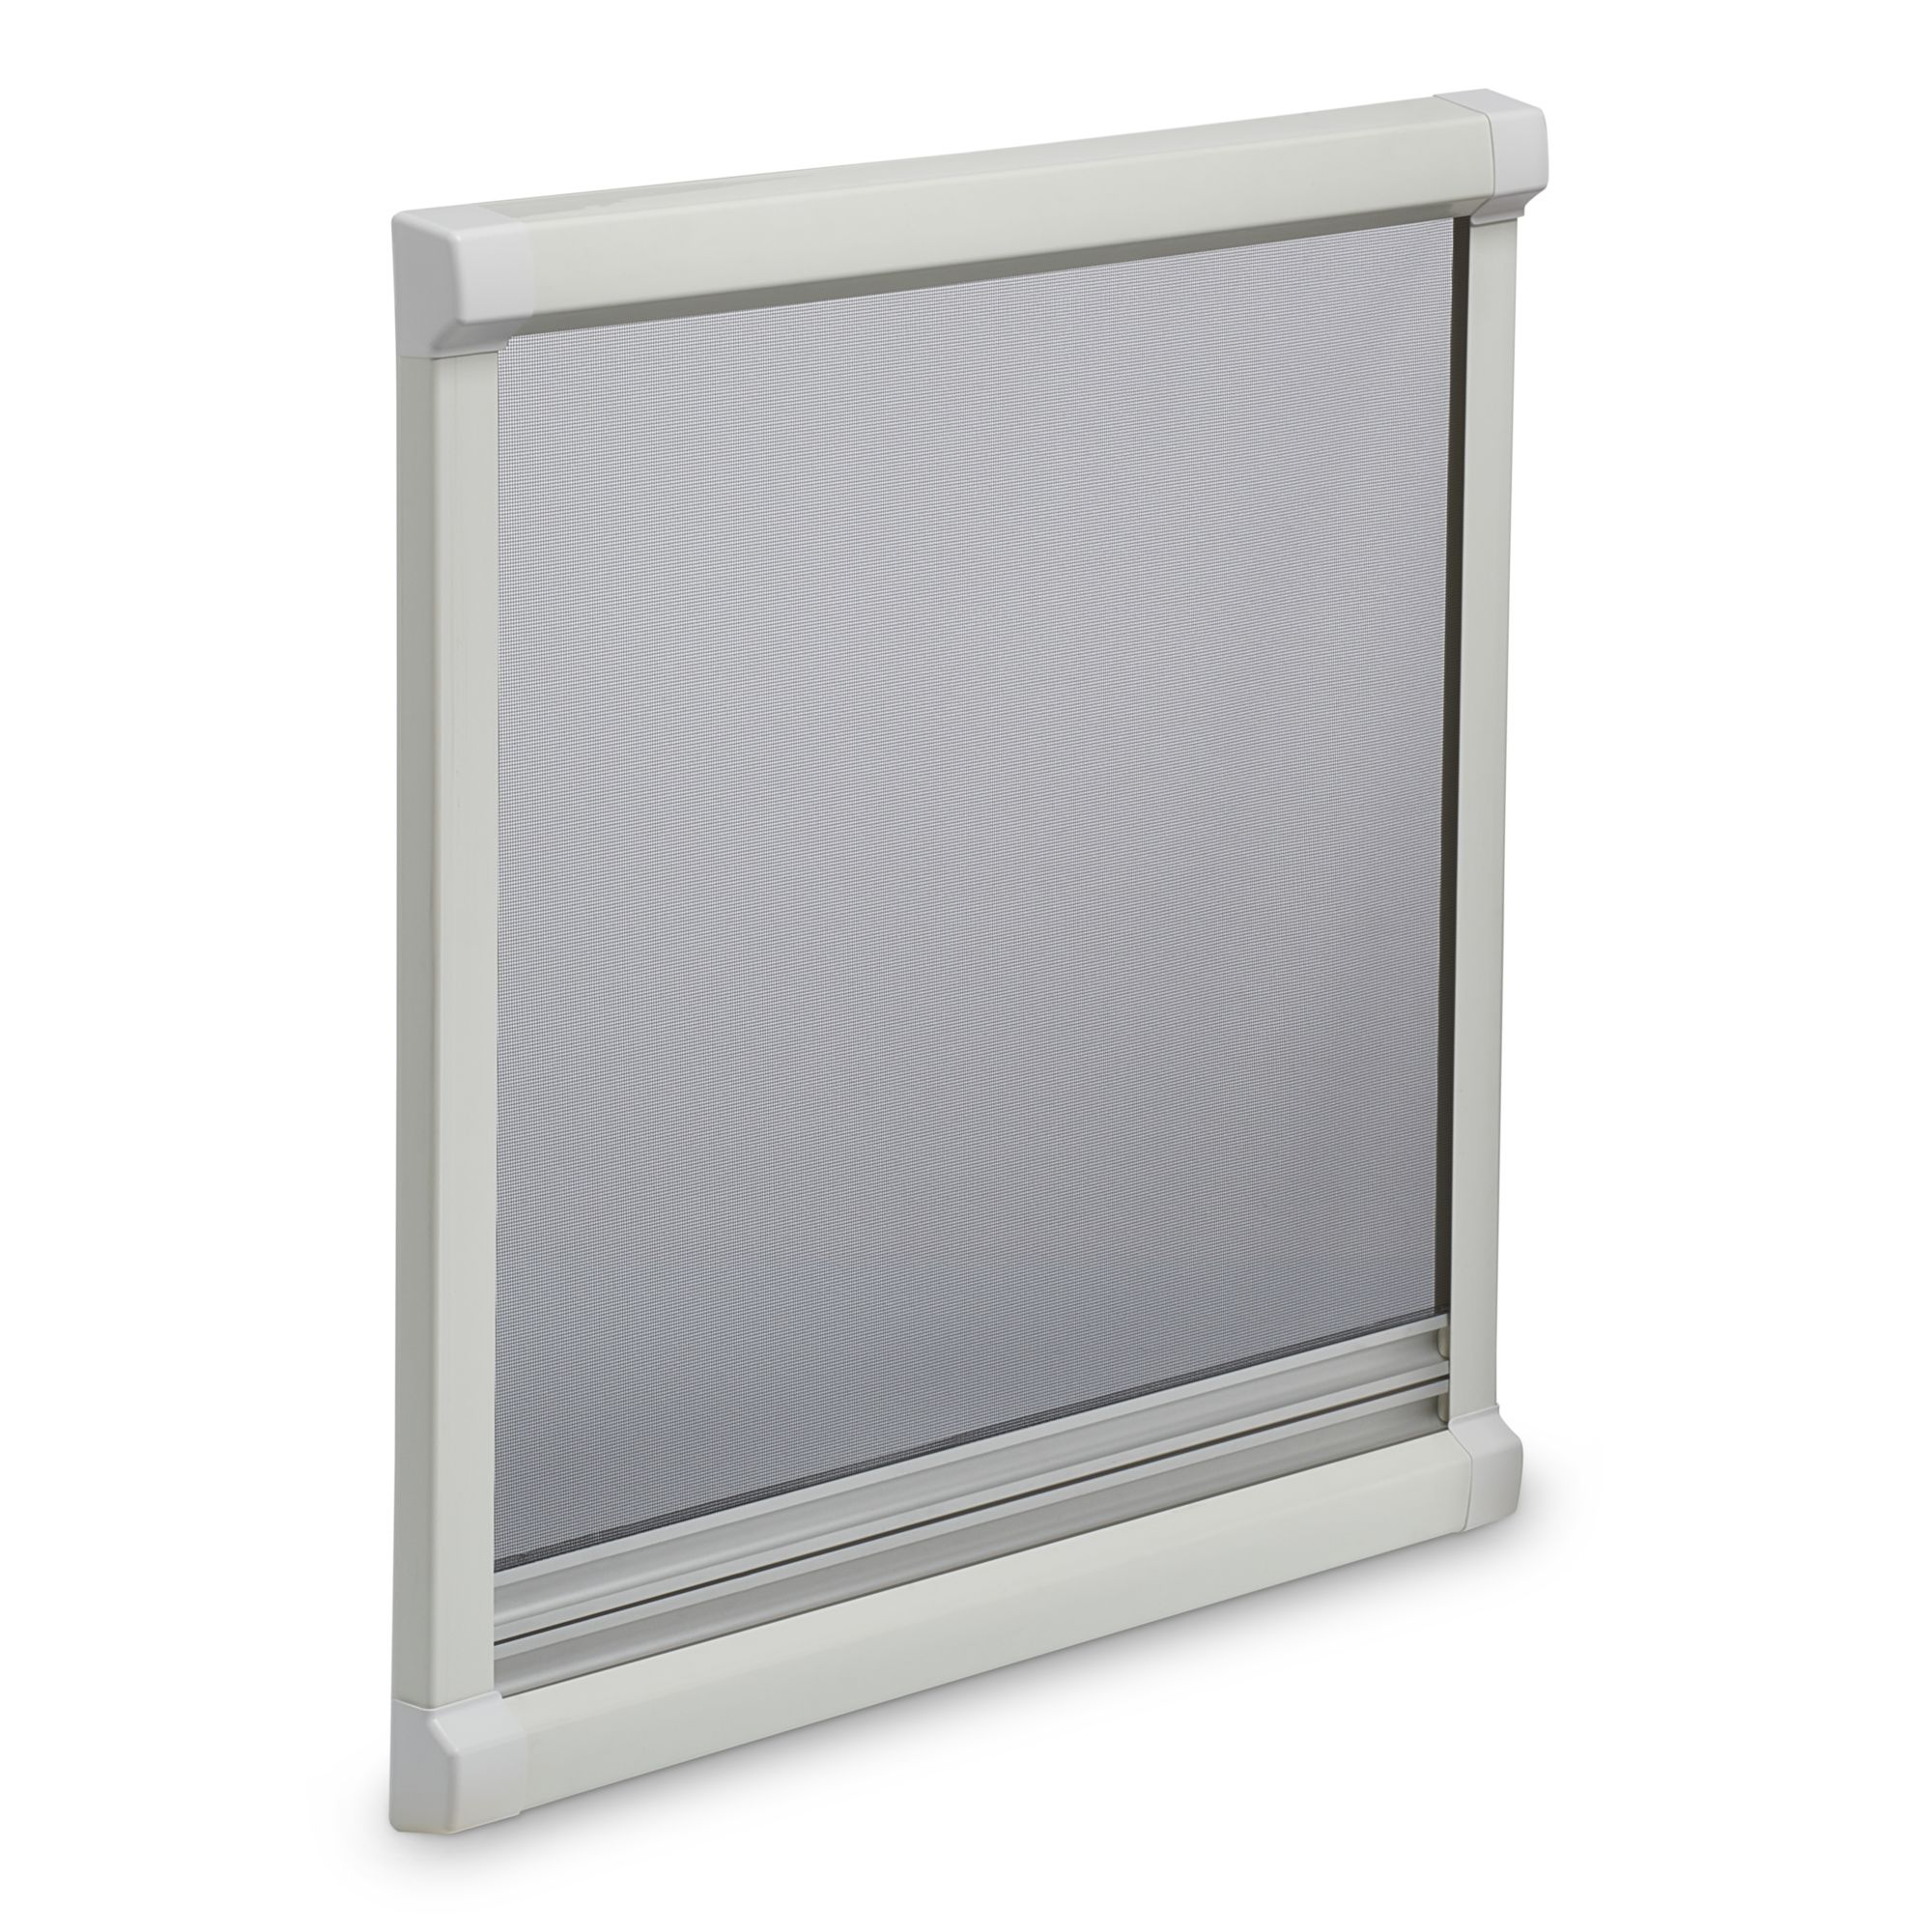 Dometic DB1R Window Roller Blind, 980 x 530 mm, cream-white